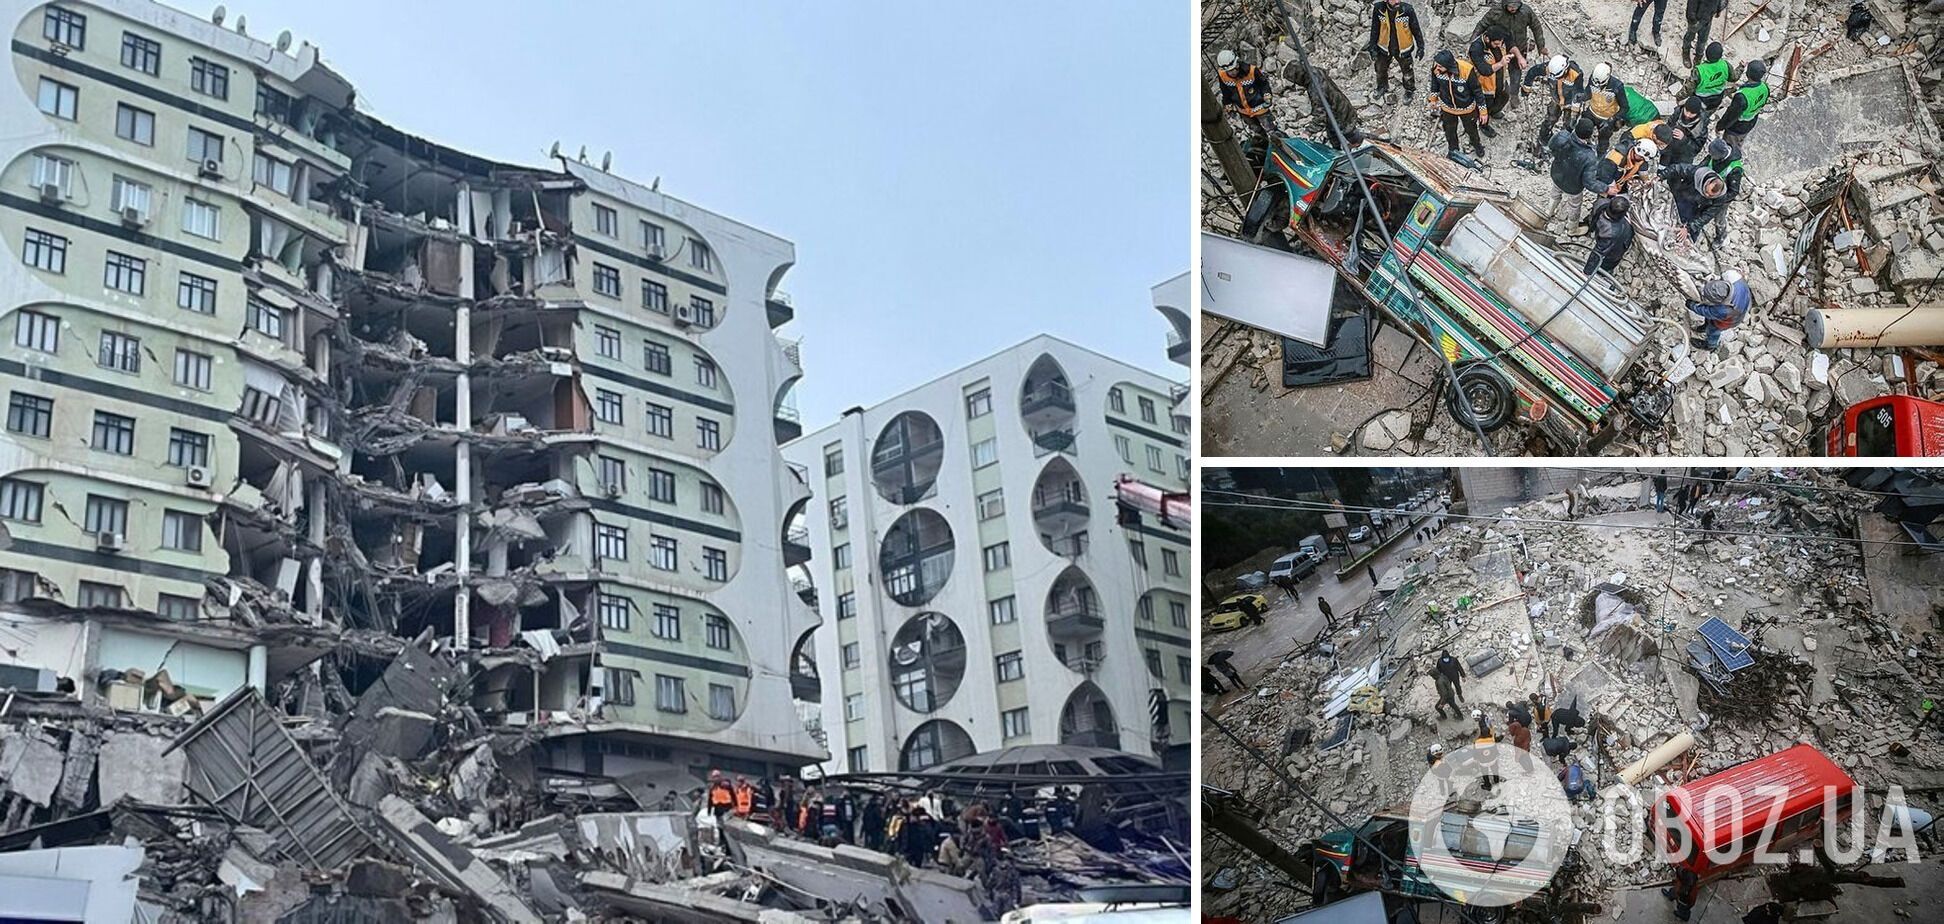 В Турции идет разбор завалов после мощного землетрясения: количество жертв возросло до 5894. Фото и видео